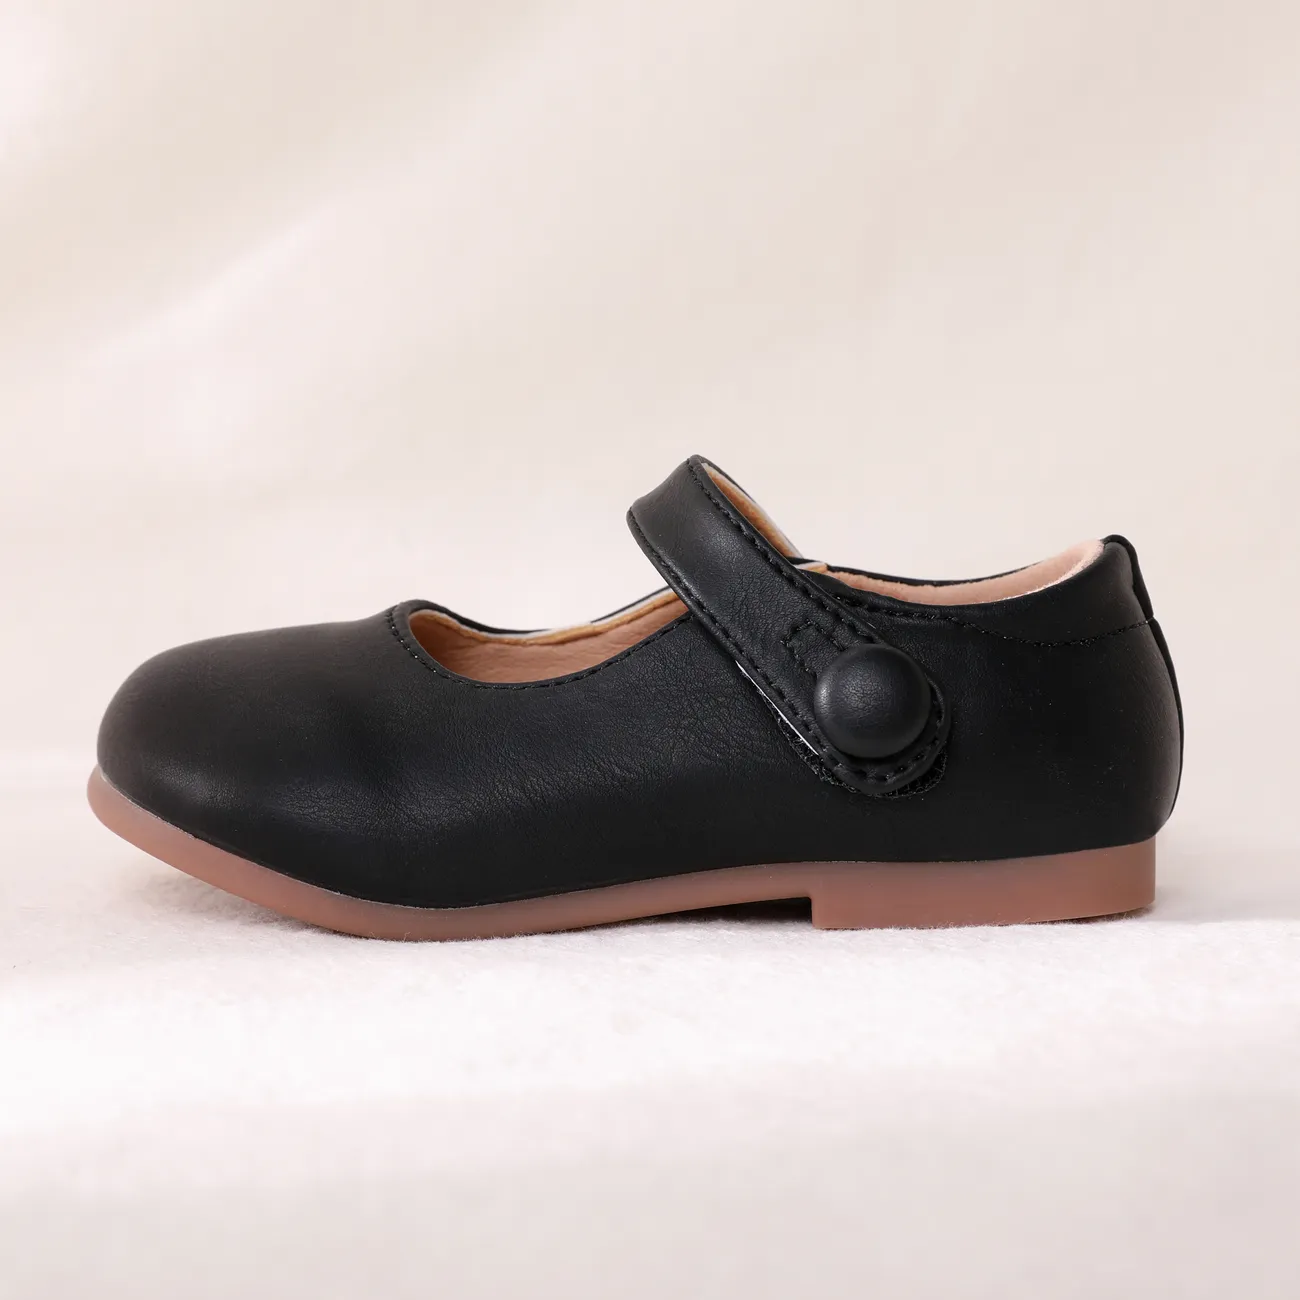 Toddler/Kids Girl Solid Color Basic Style Velcro Leather Shoes Black big image 1